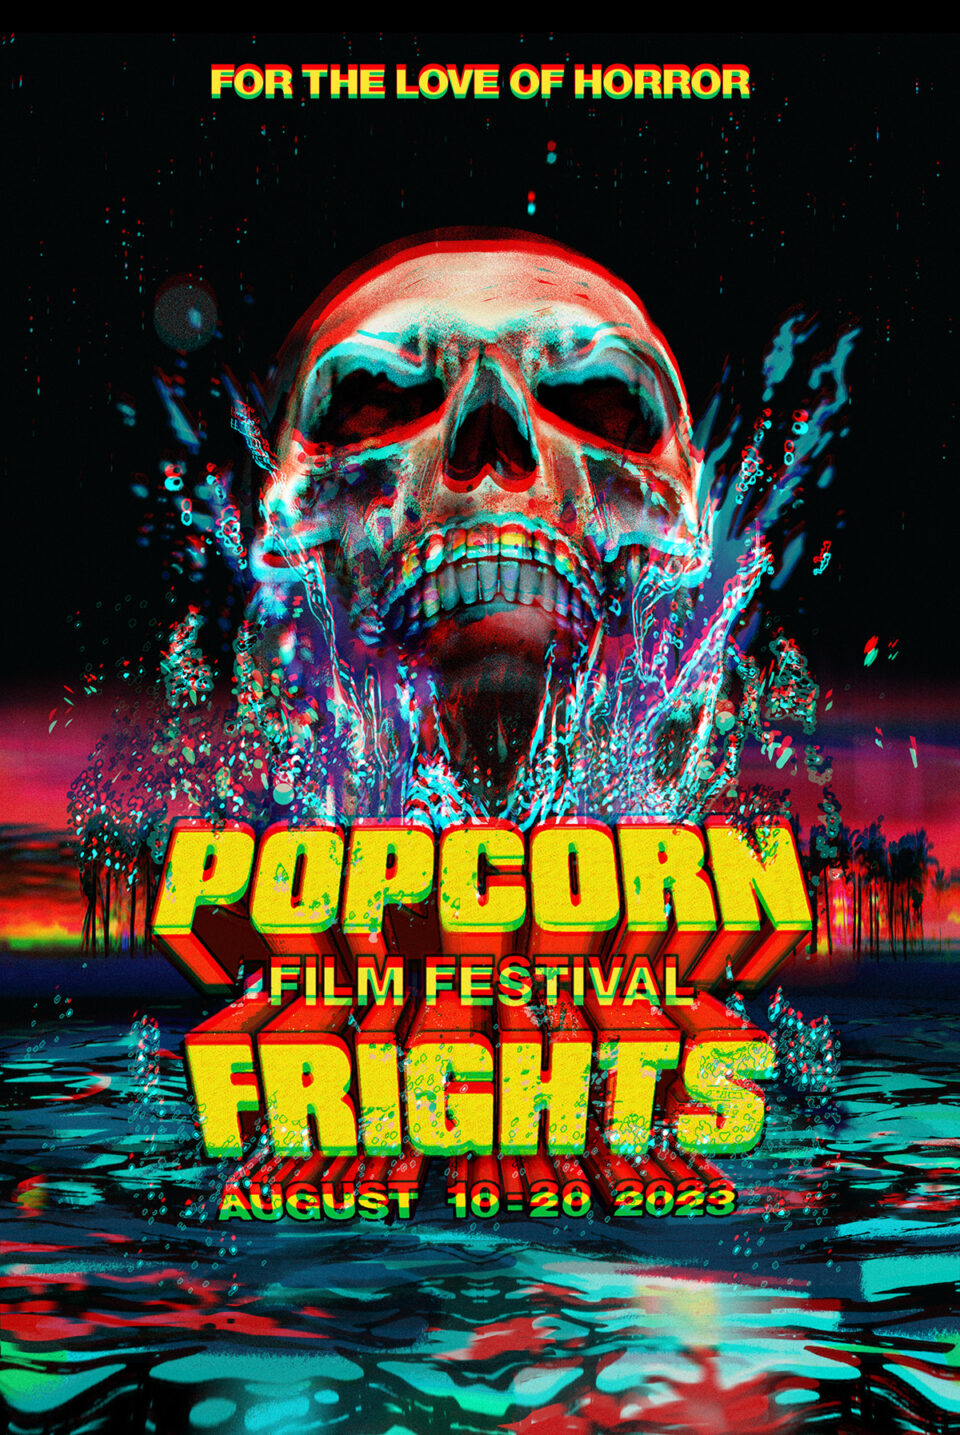 Popcorn Frights